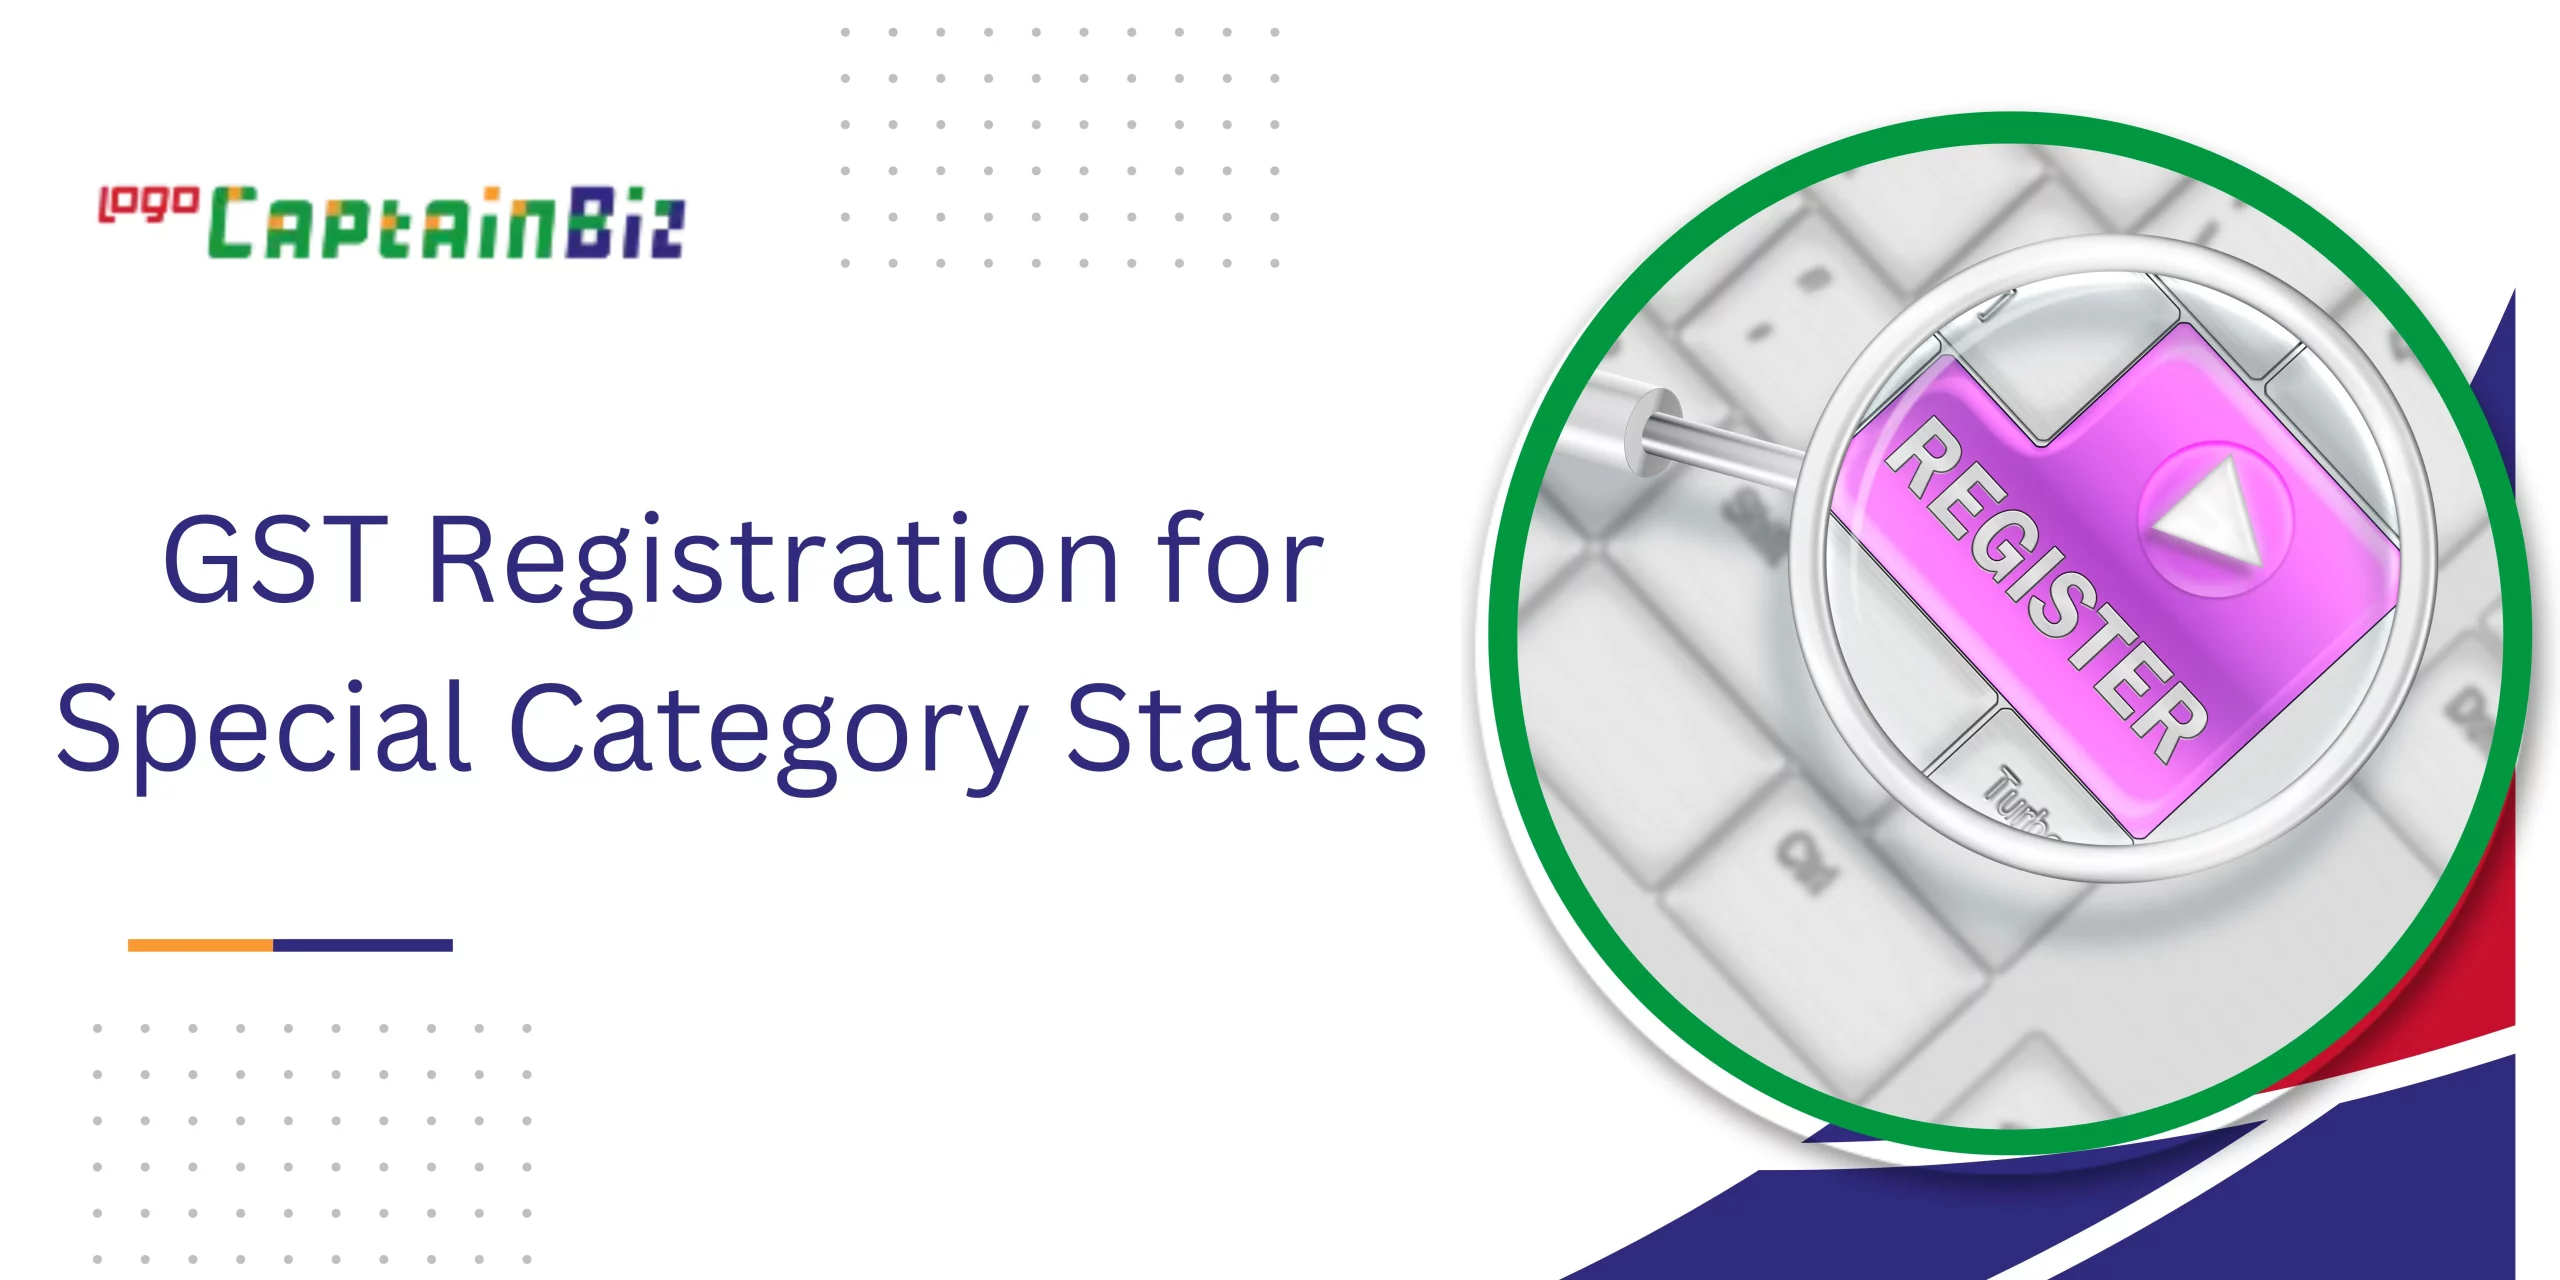 CaptainBiz: GST Registration for Special Category States